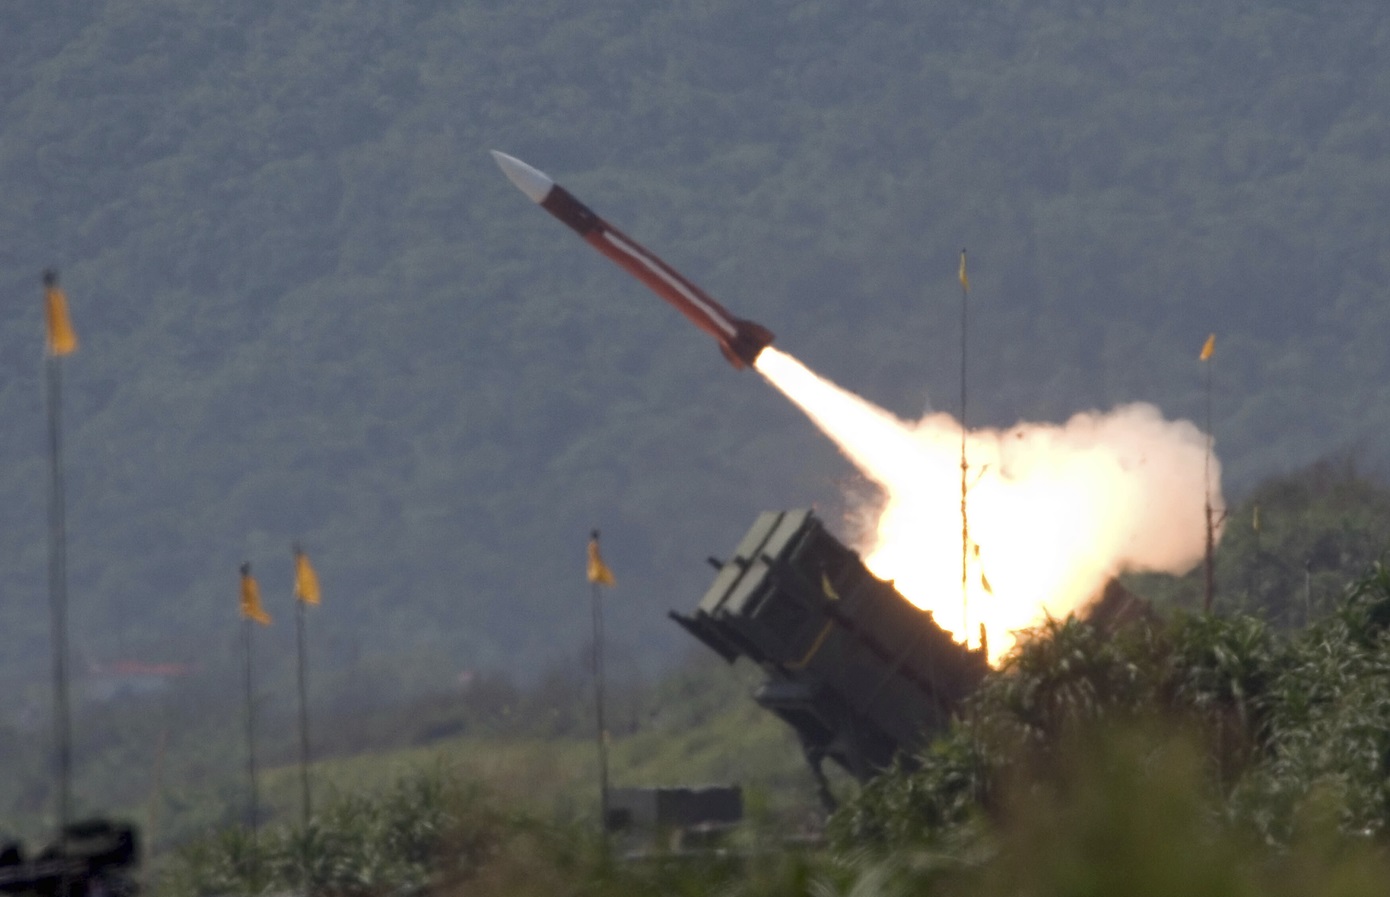 H Ισπανία θα δώσει πυραύλους Patriot στην Ουκρανία